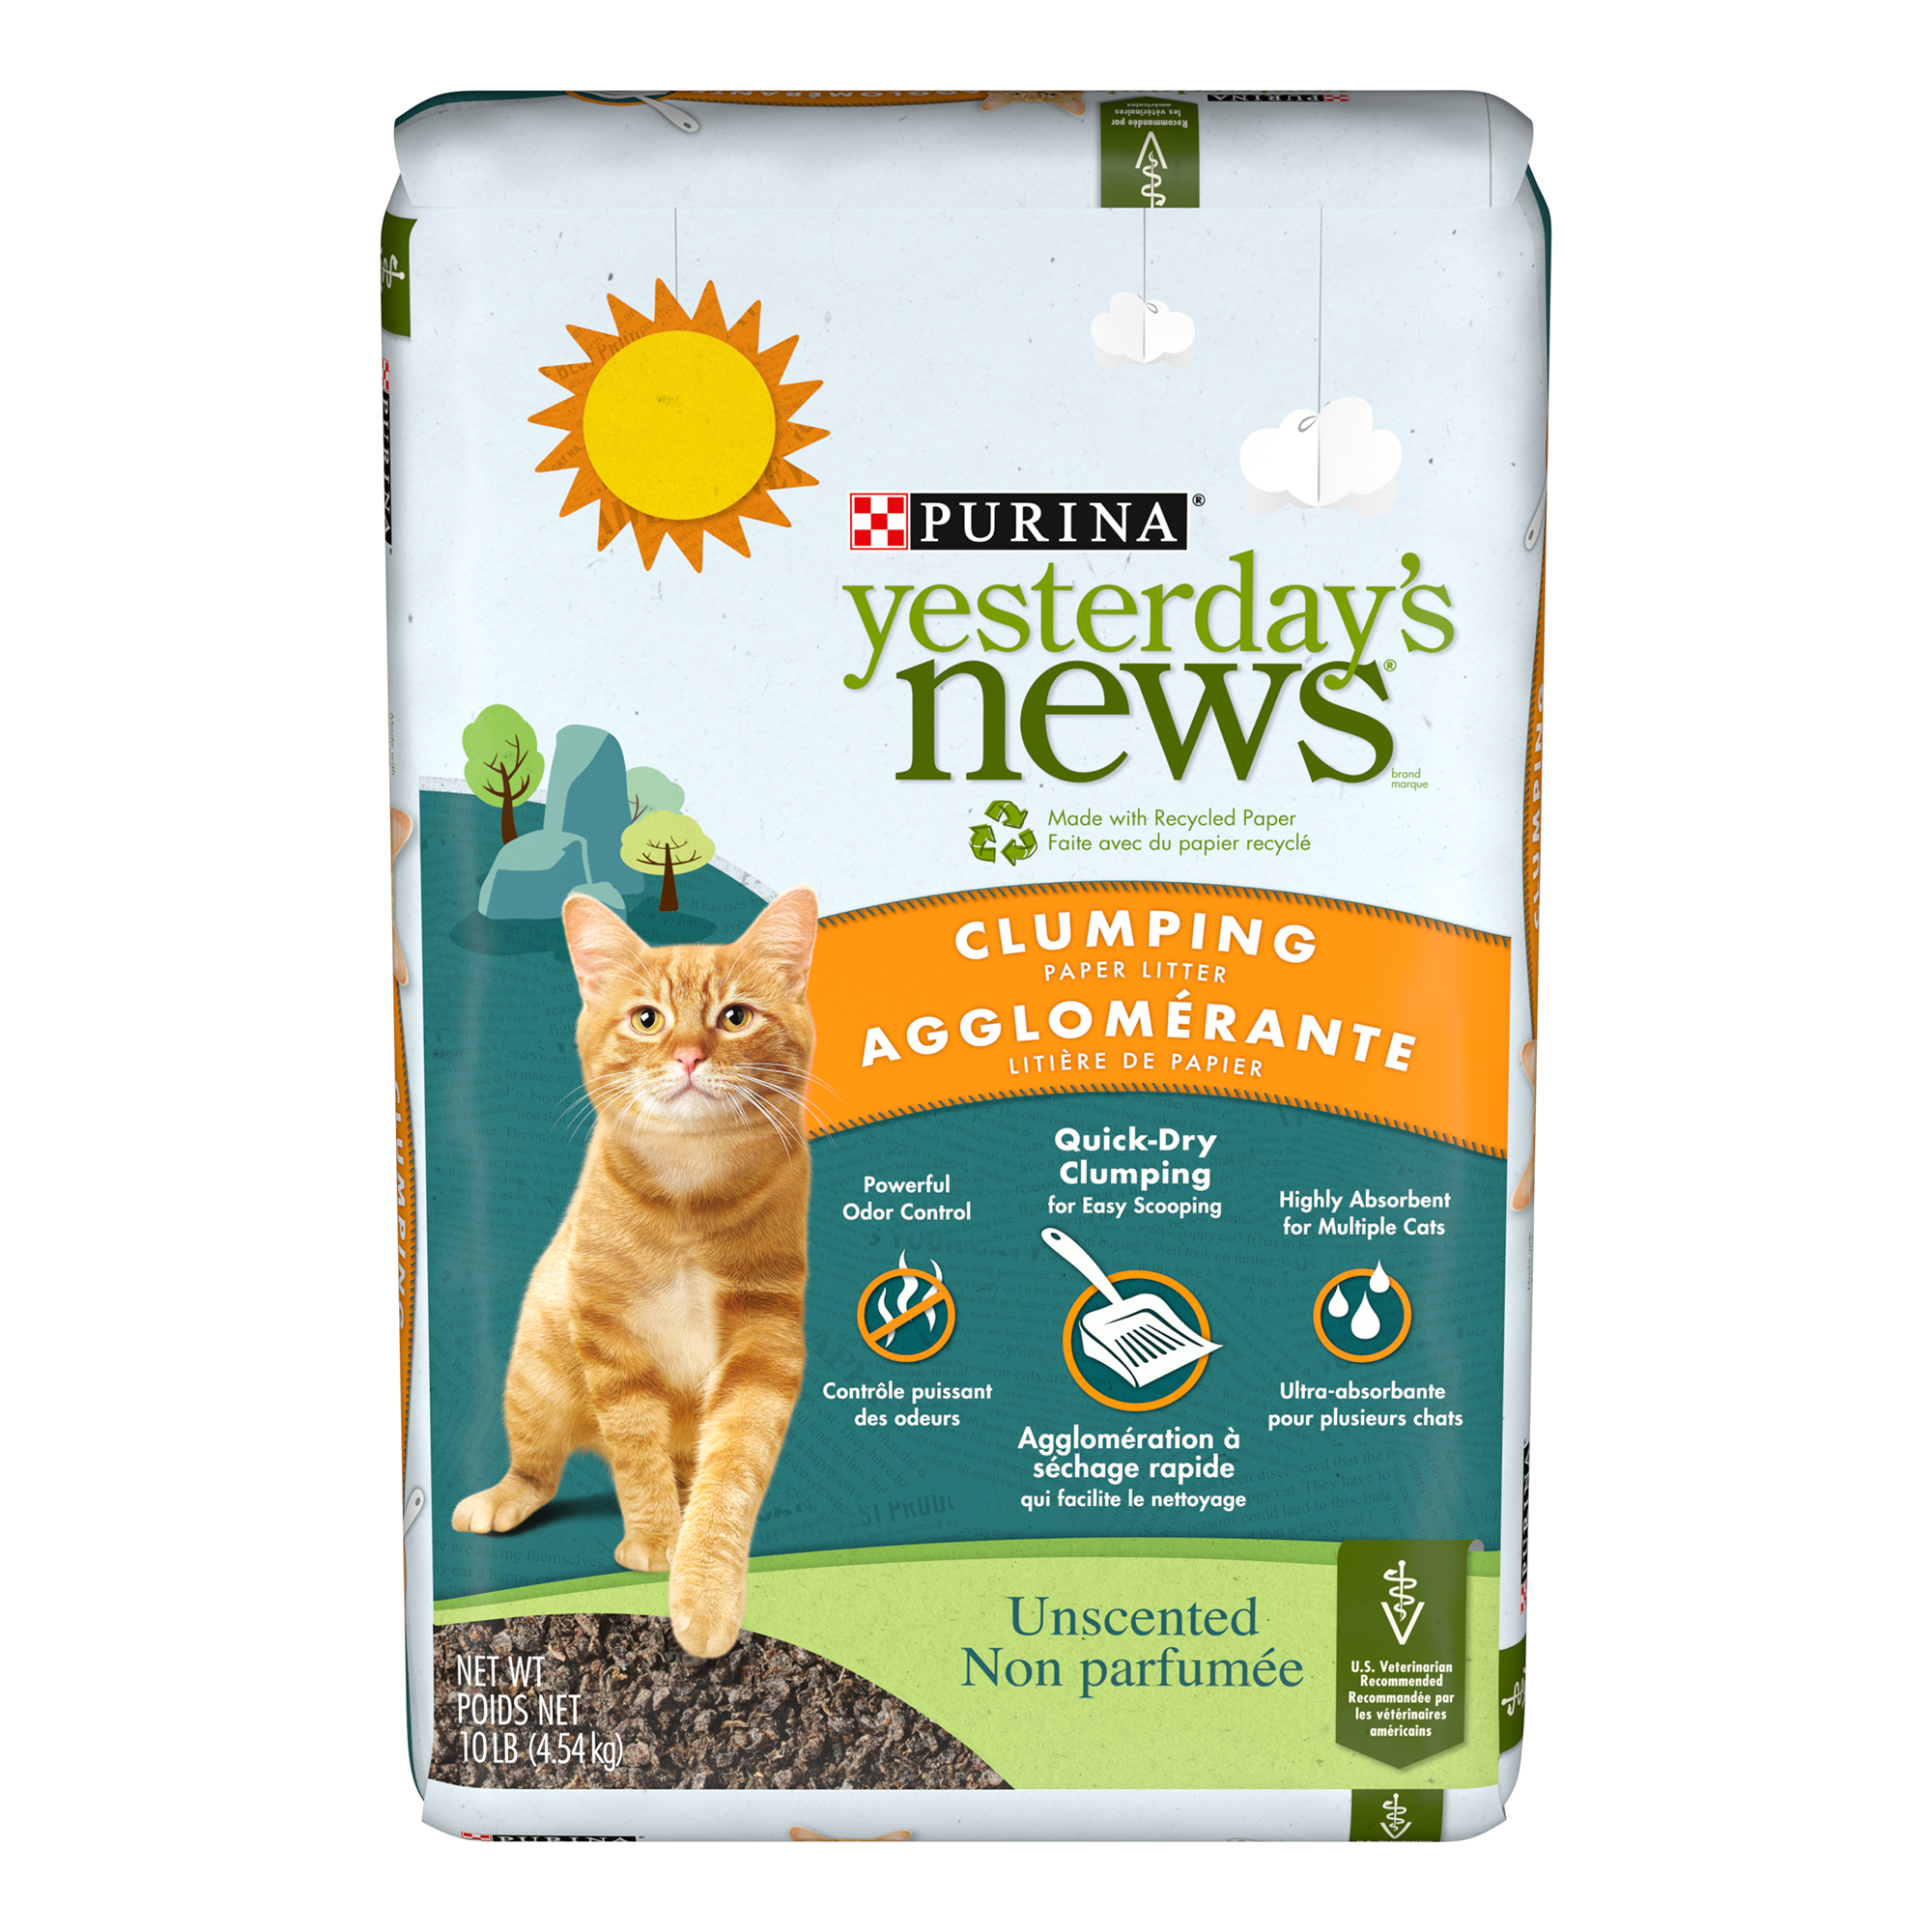 Purina® Yesterday's News® Paper Cat Litter